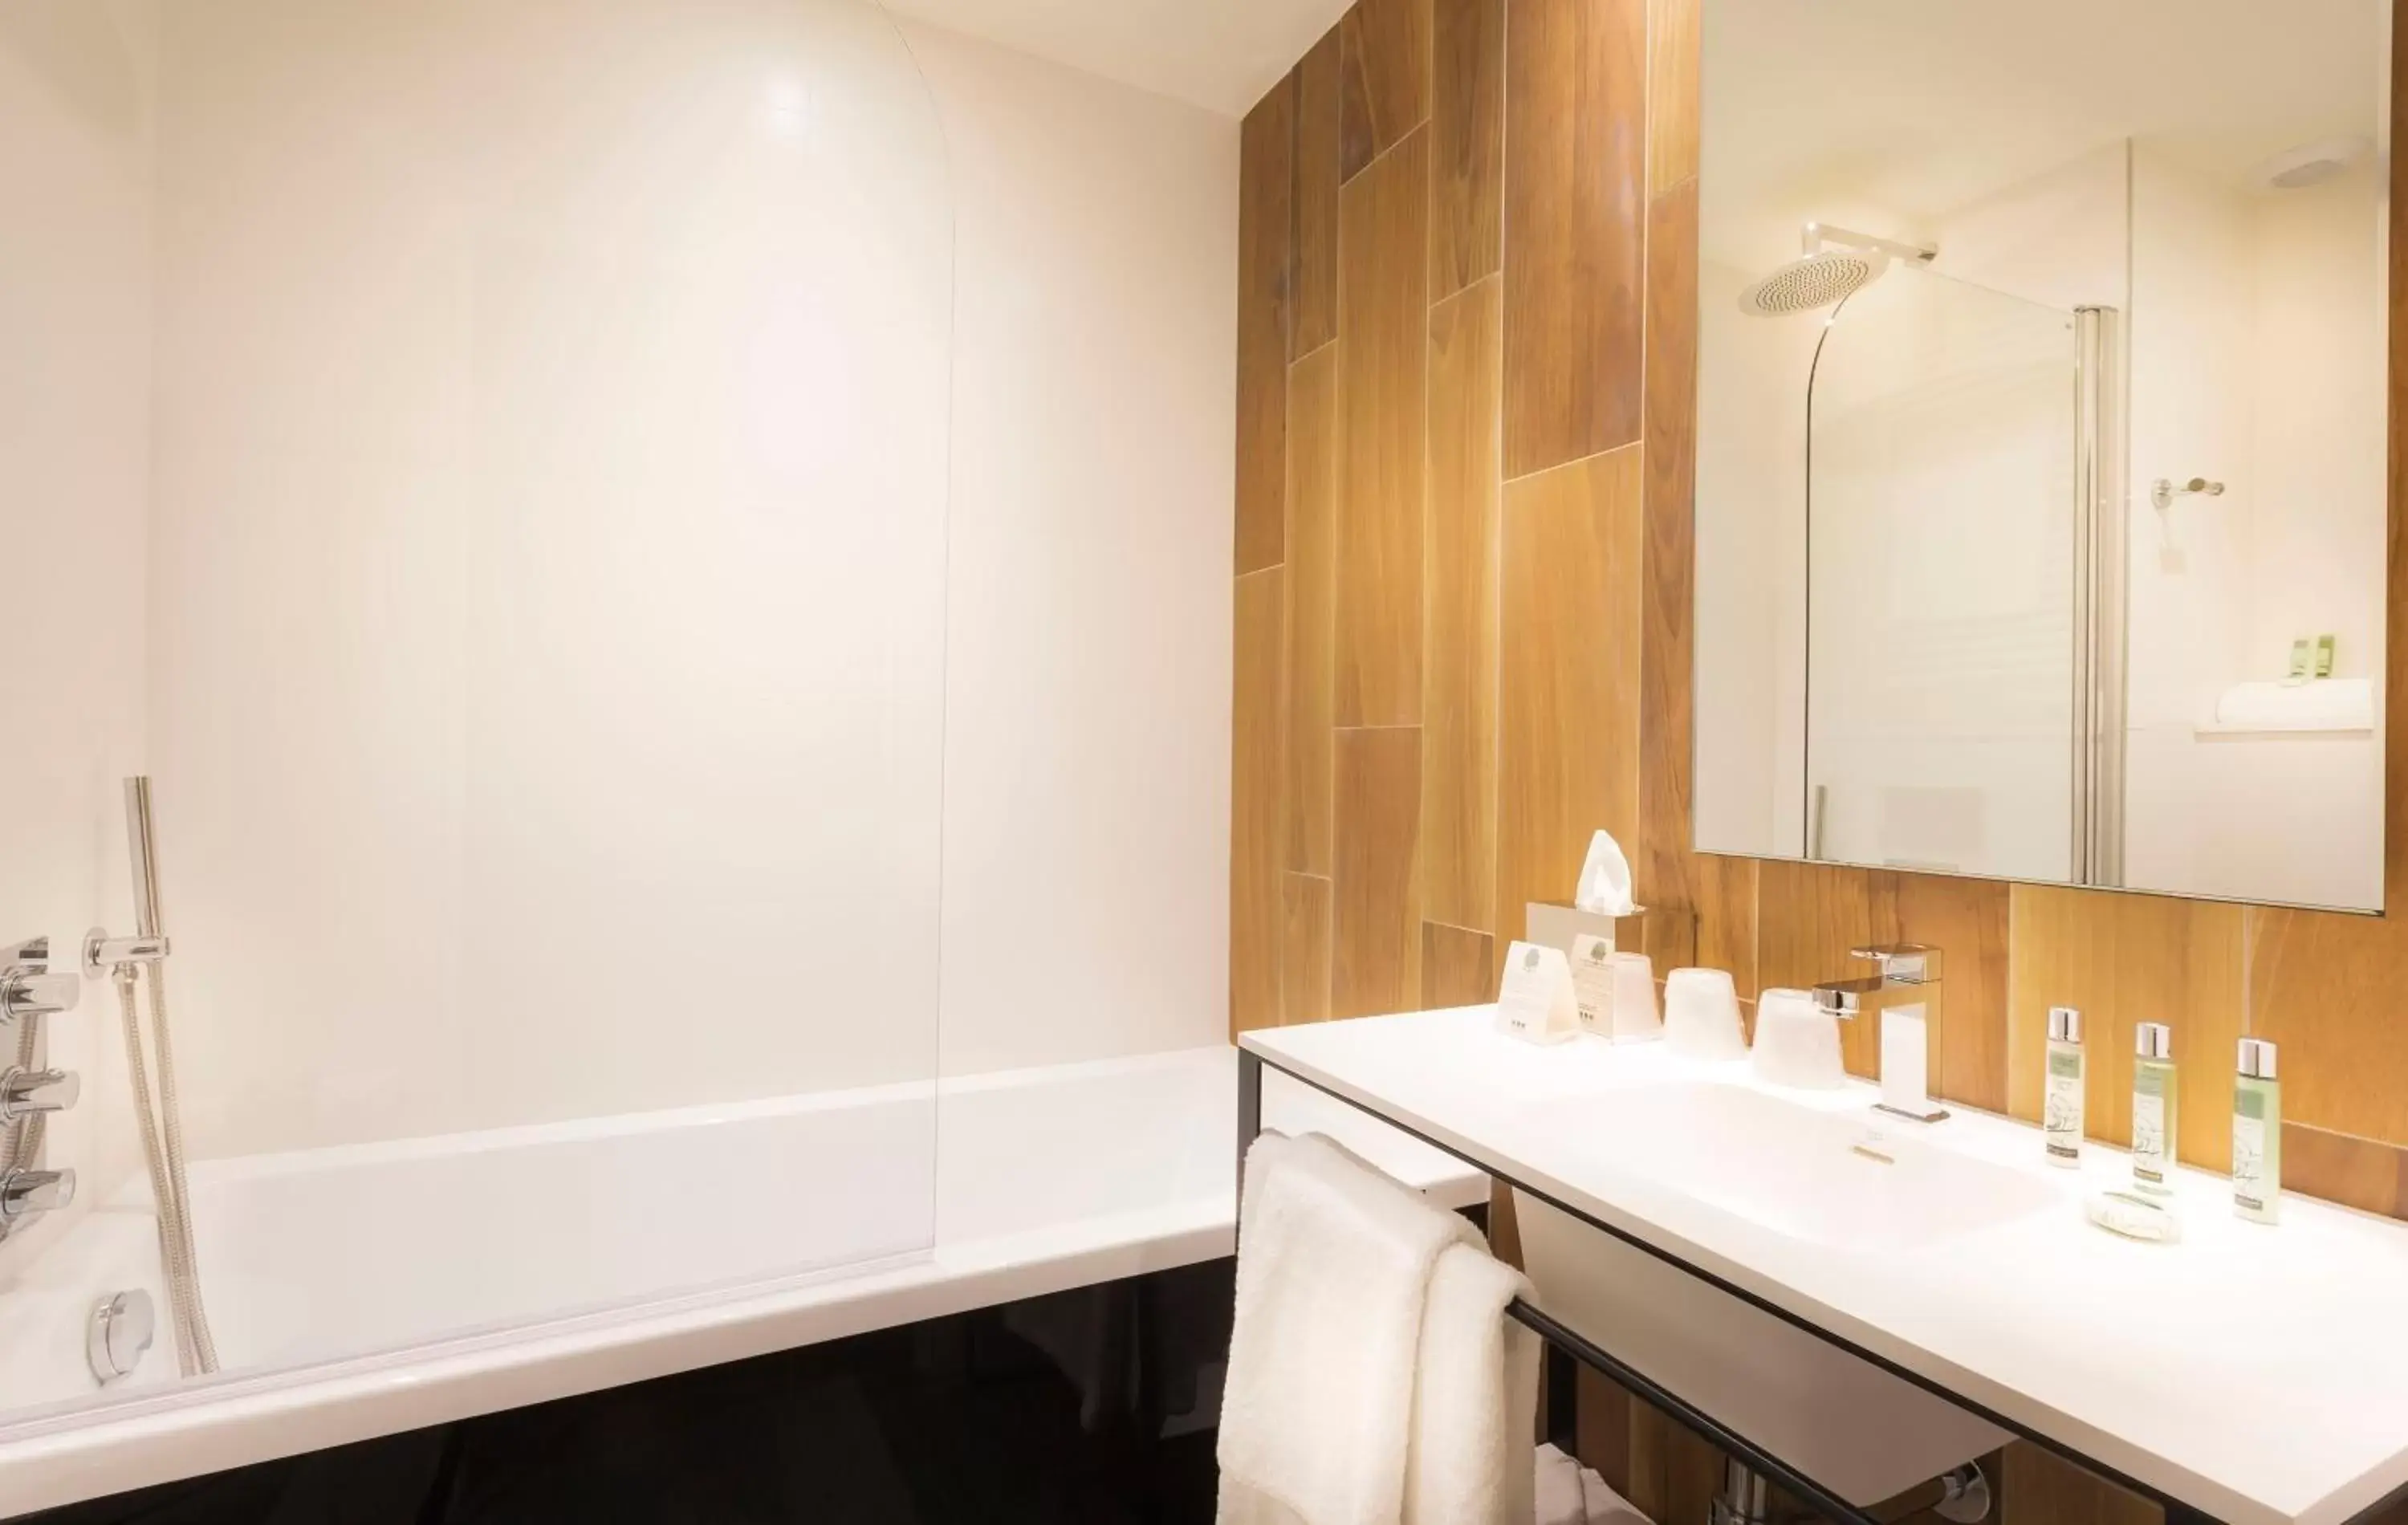 Bathroom in Hotel Acanthe - Boulogne Billancourt